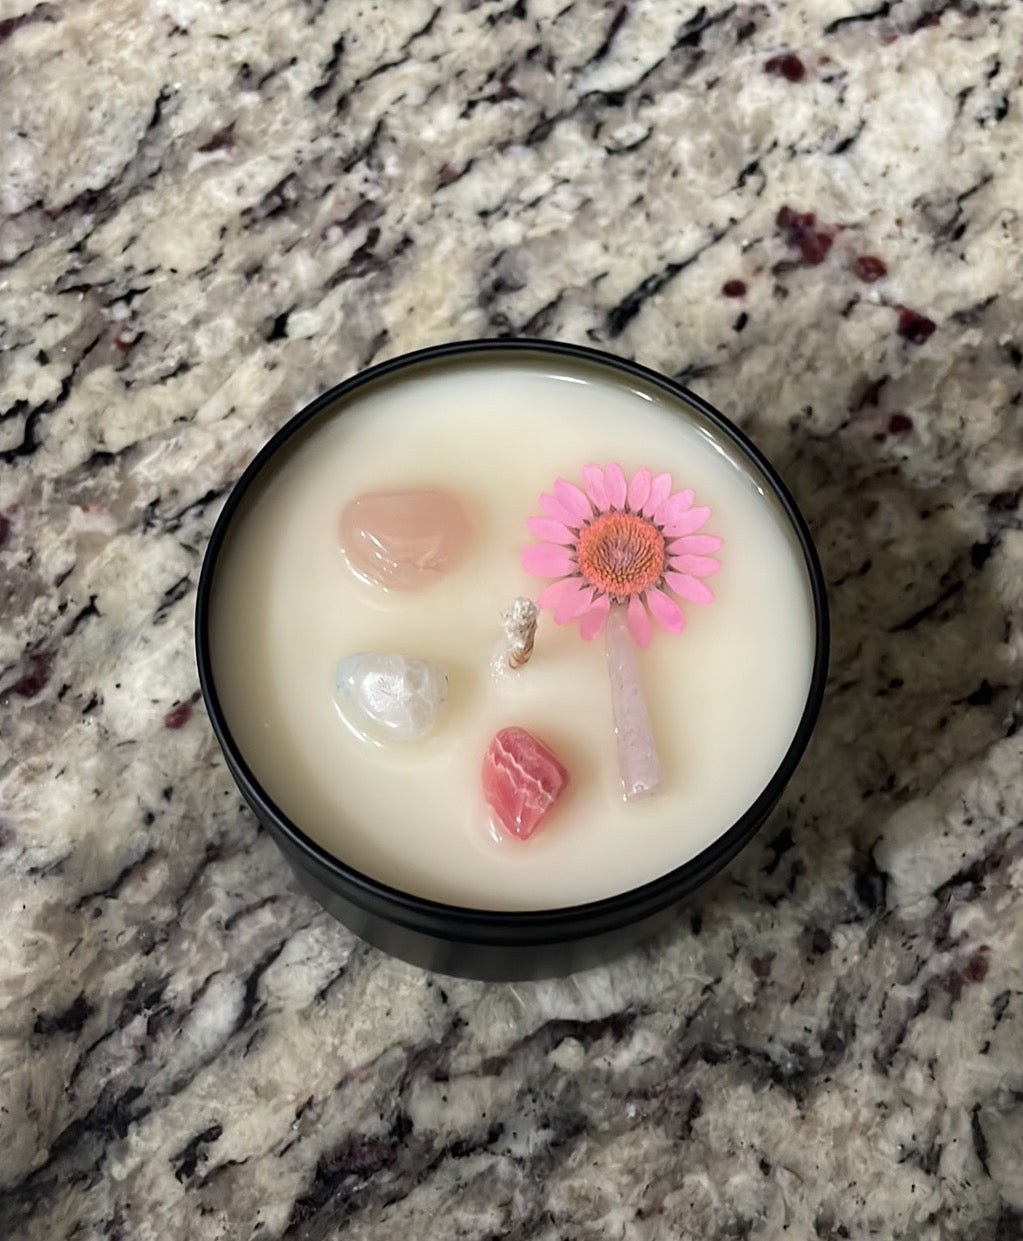 Handmade 4oz & 8oz Reiki Infused Love Letter Fragrance - Self-love Candle